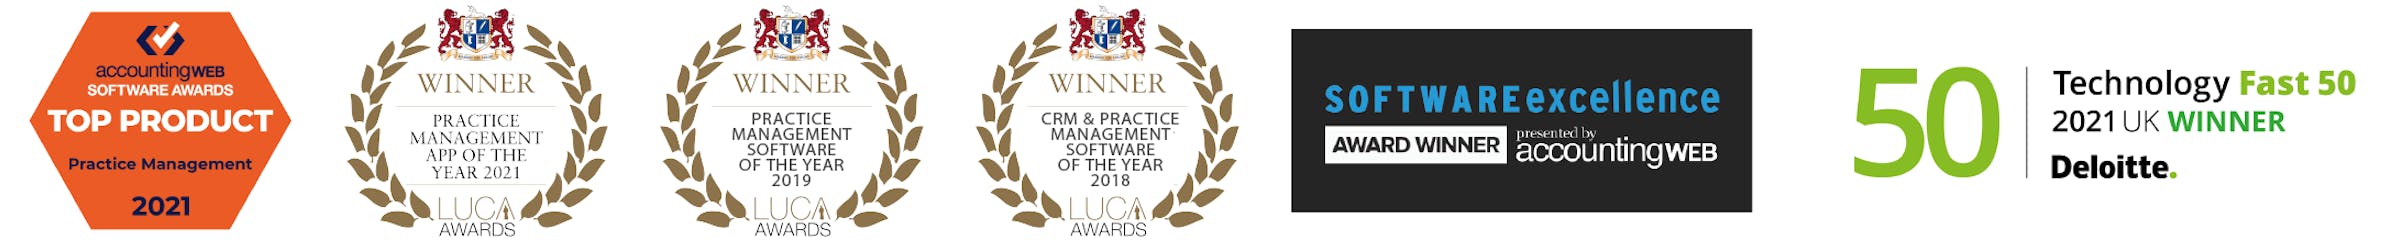 AccountancyManager Award Winning Practice Management Software